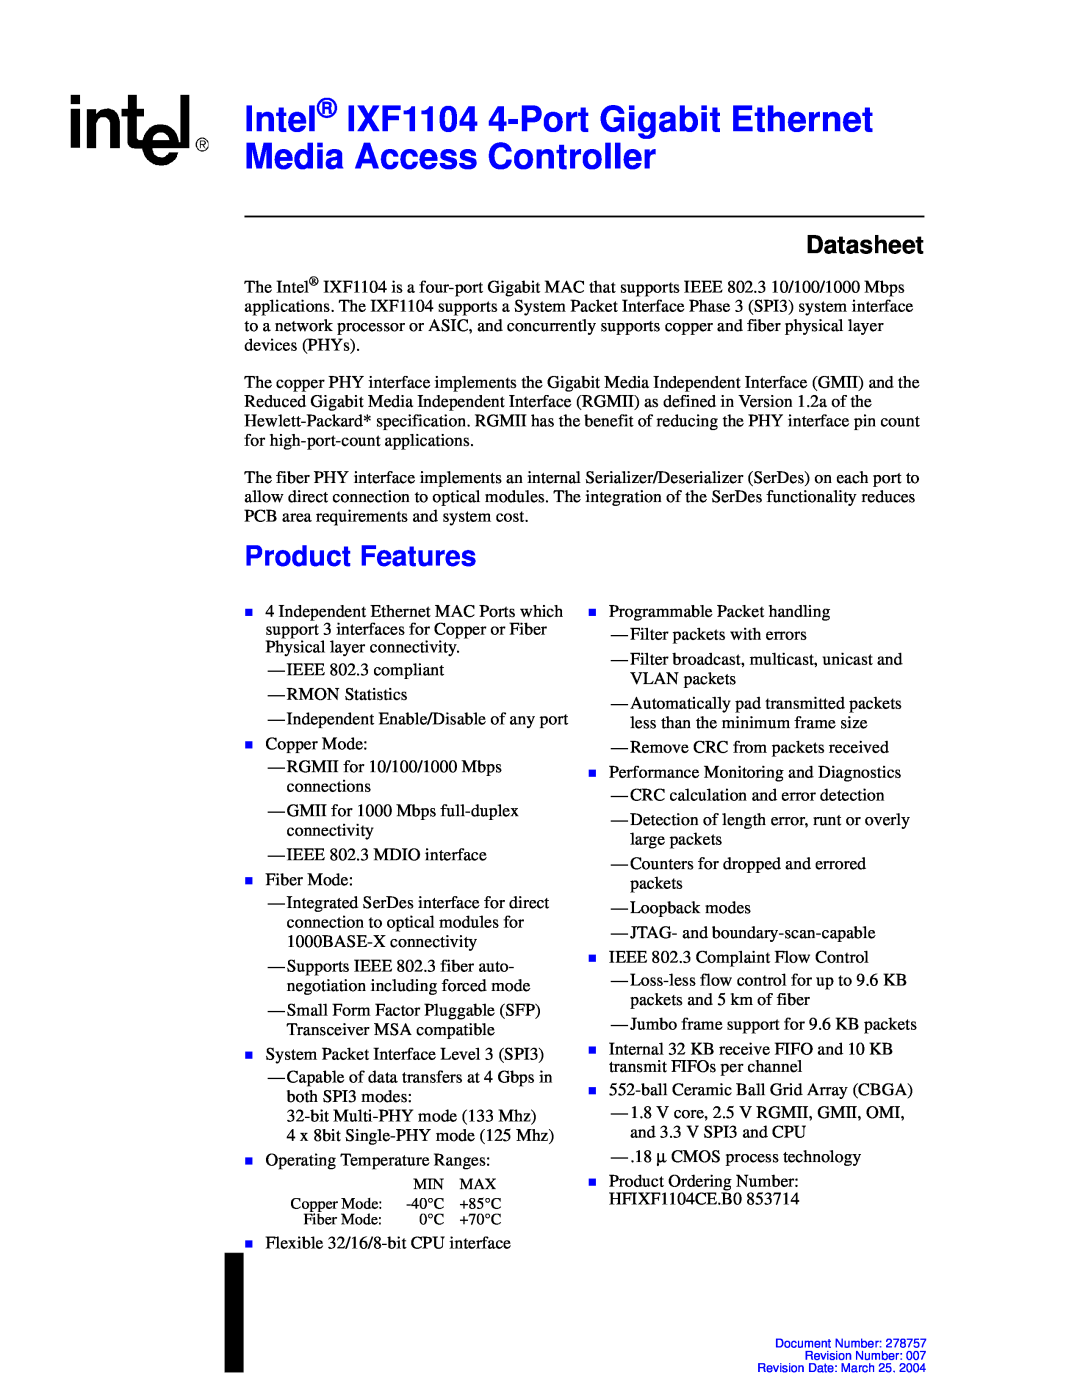 Intel IXF1104 manual Product Features, Datasheet 